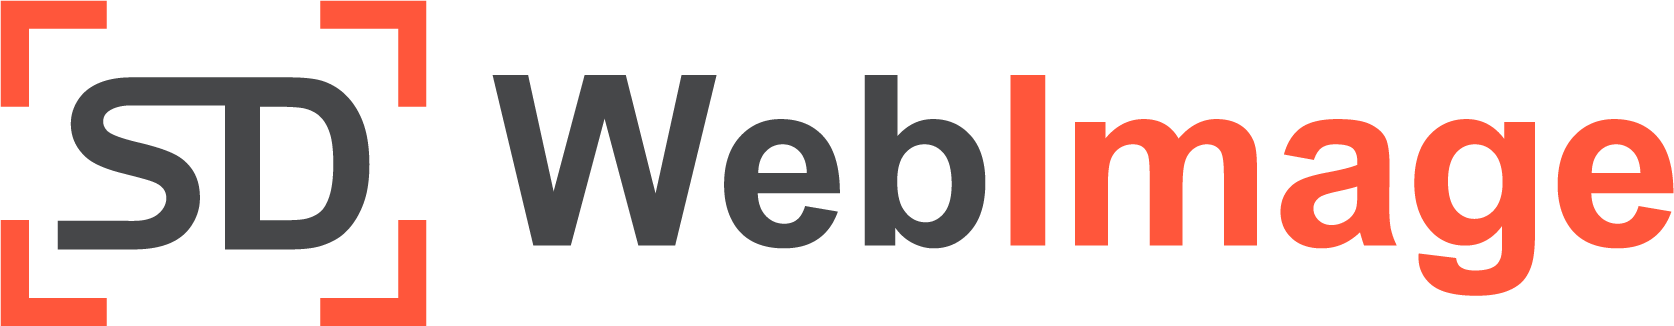 SDWebImage_logo.png